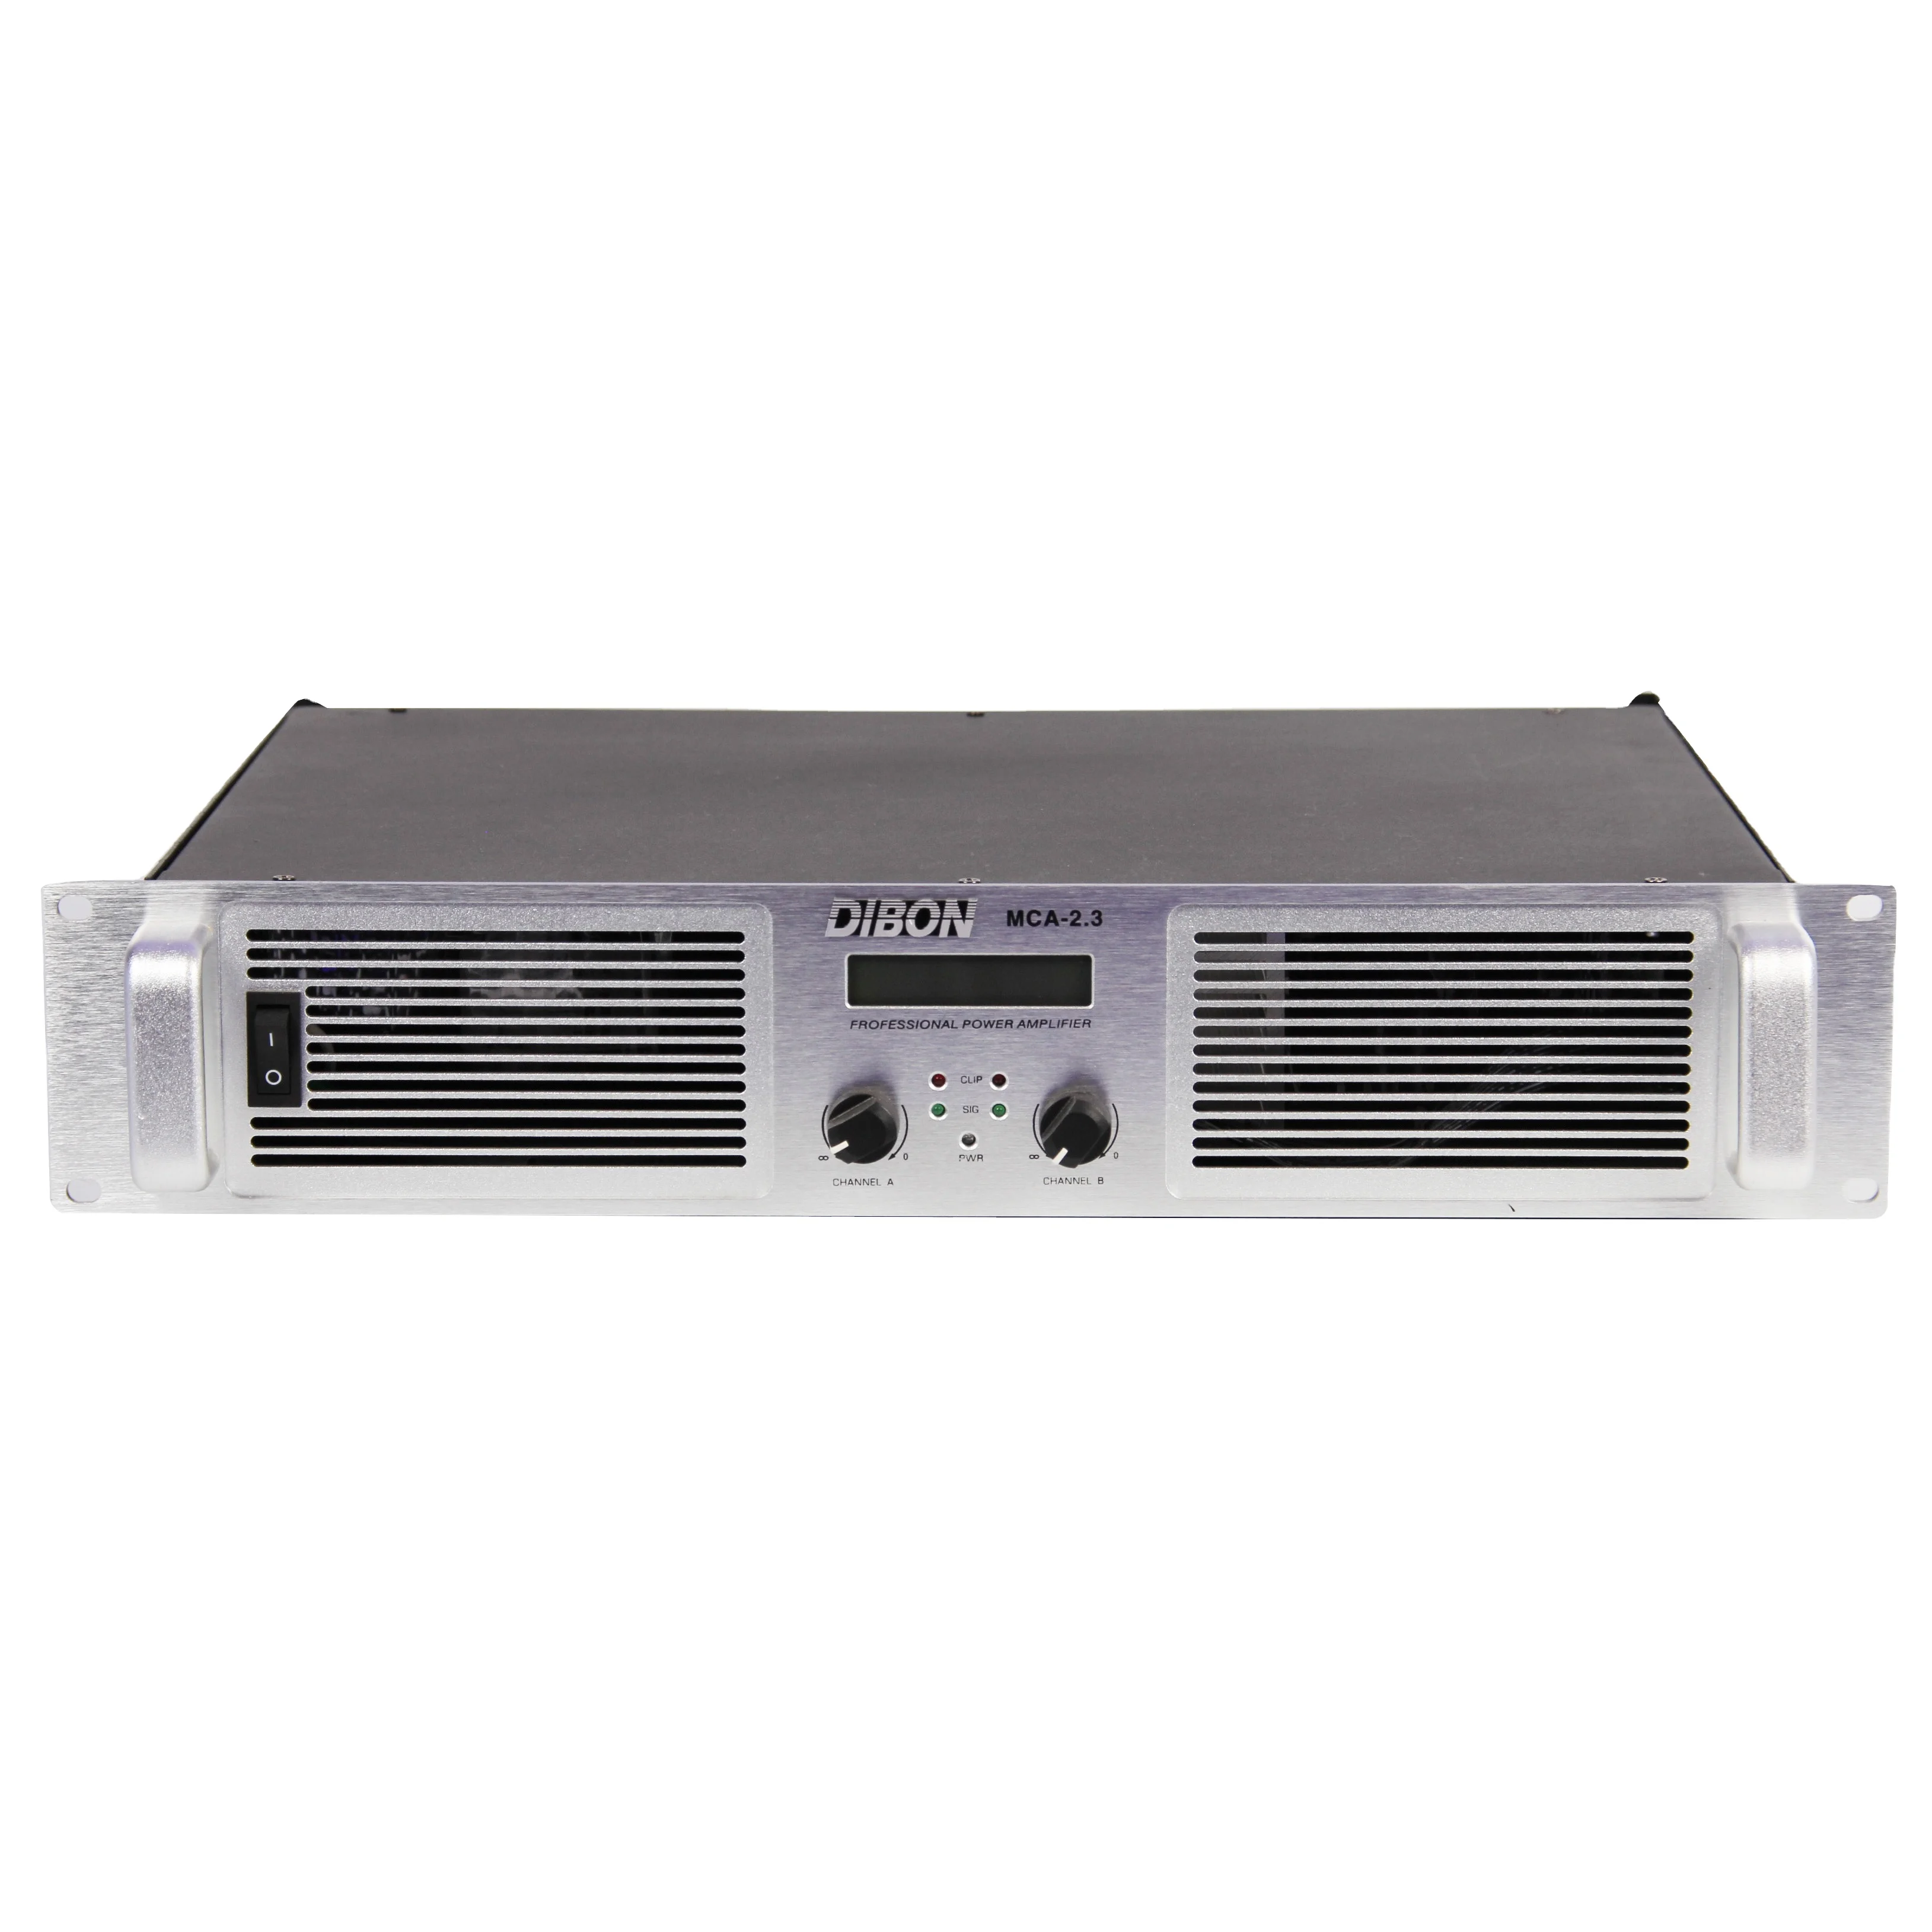 Professional Amplifier Public Address System Amplifier MCA-7.3